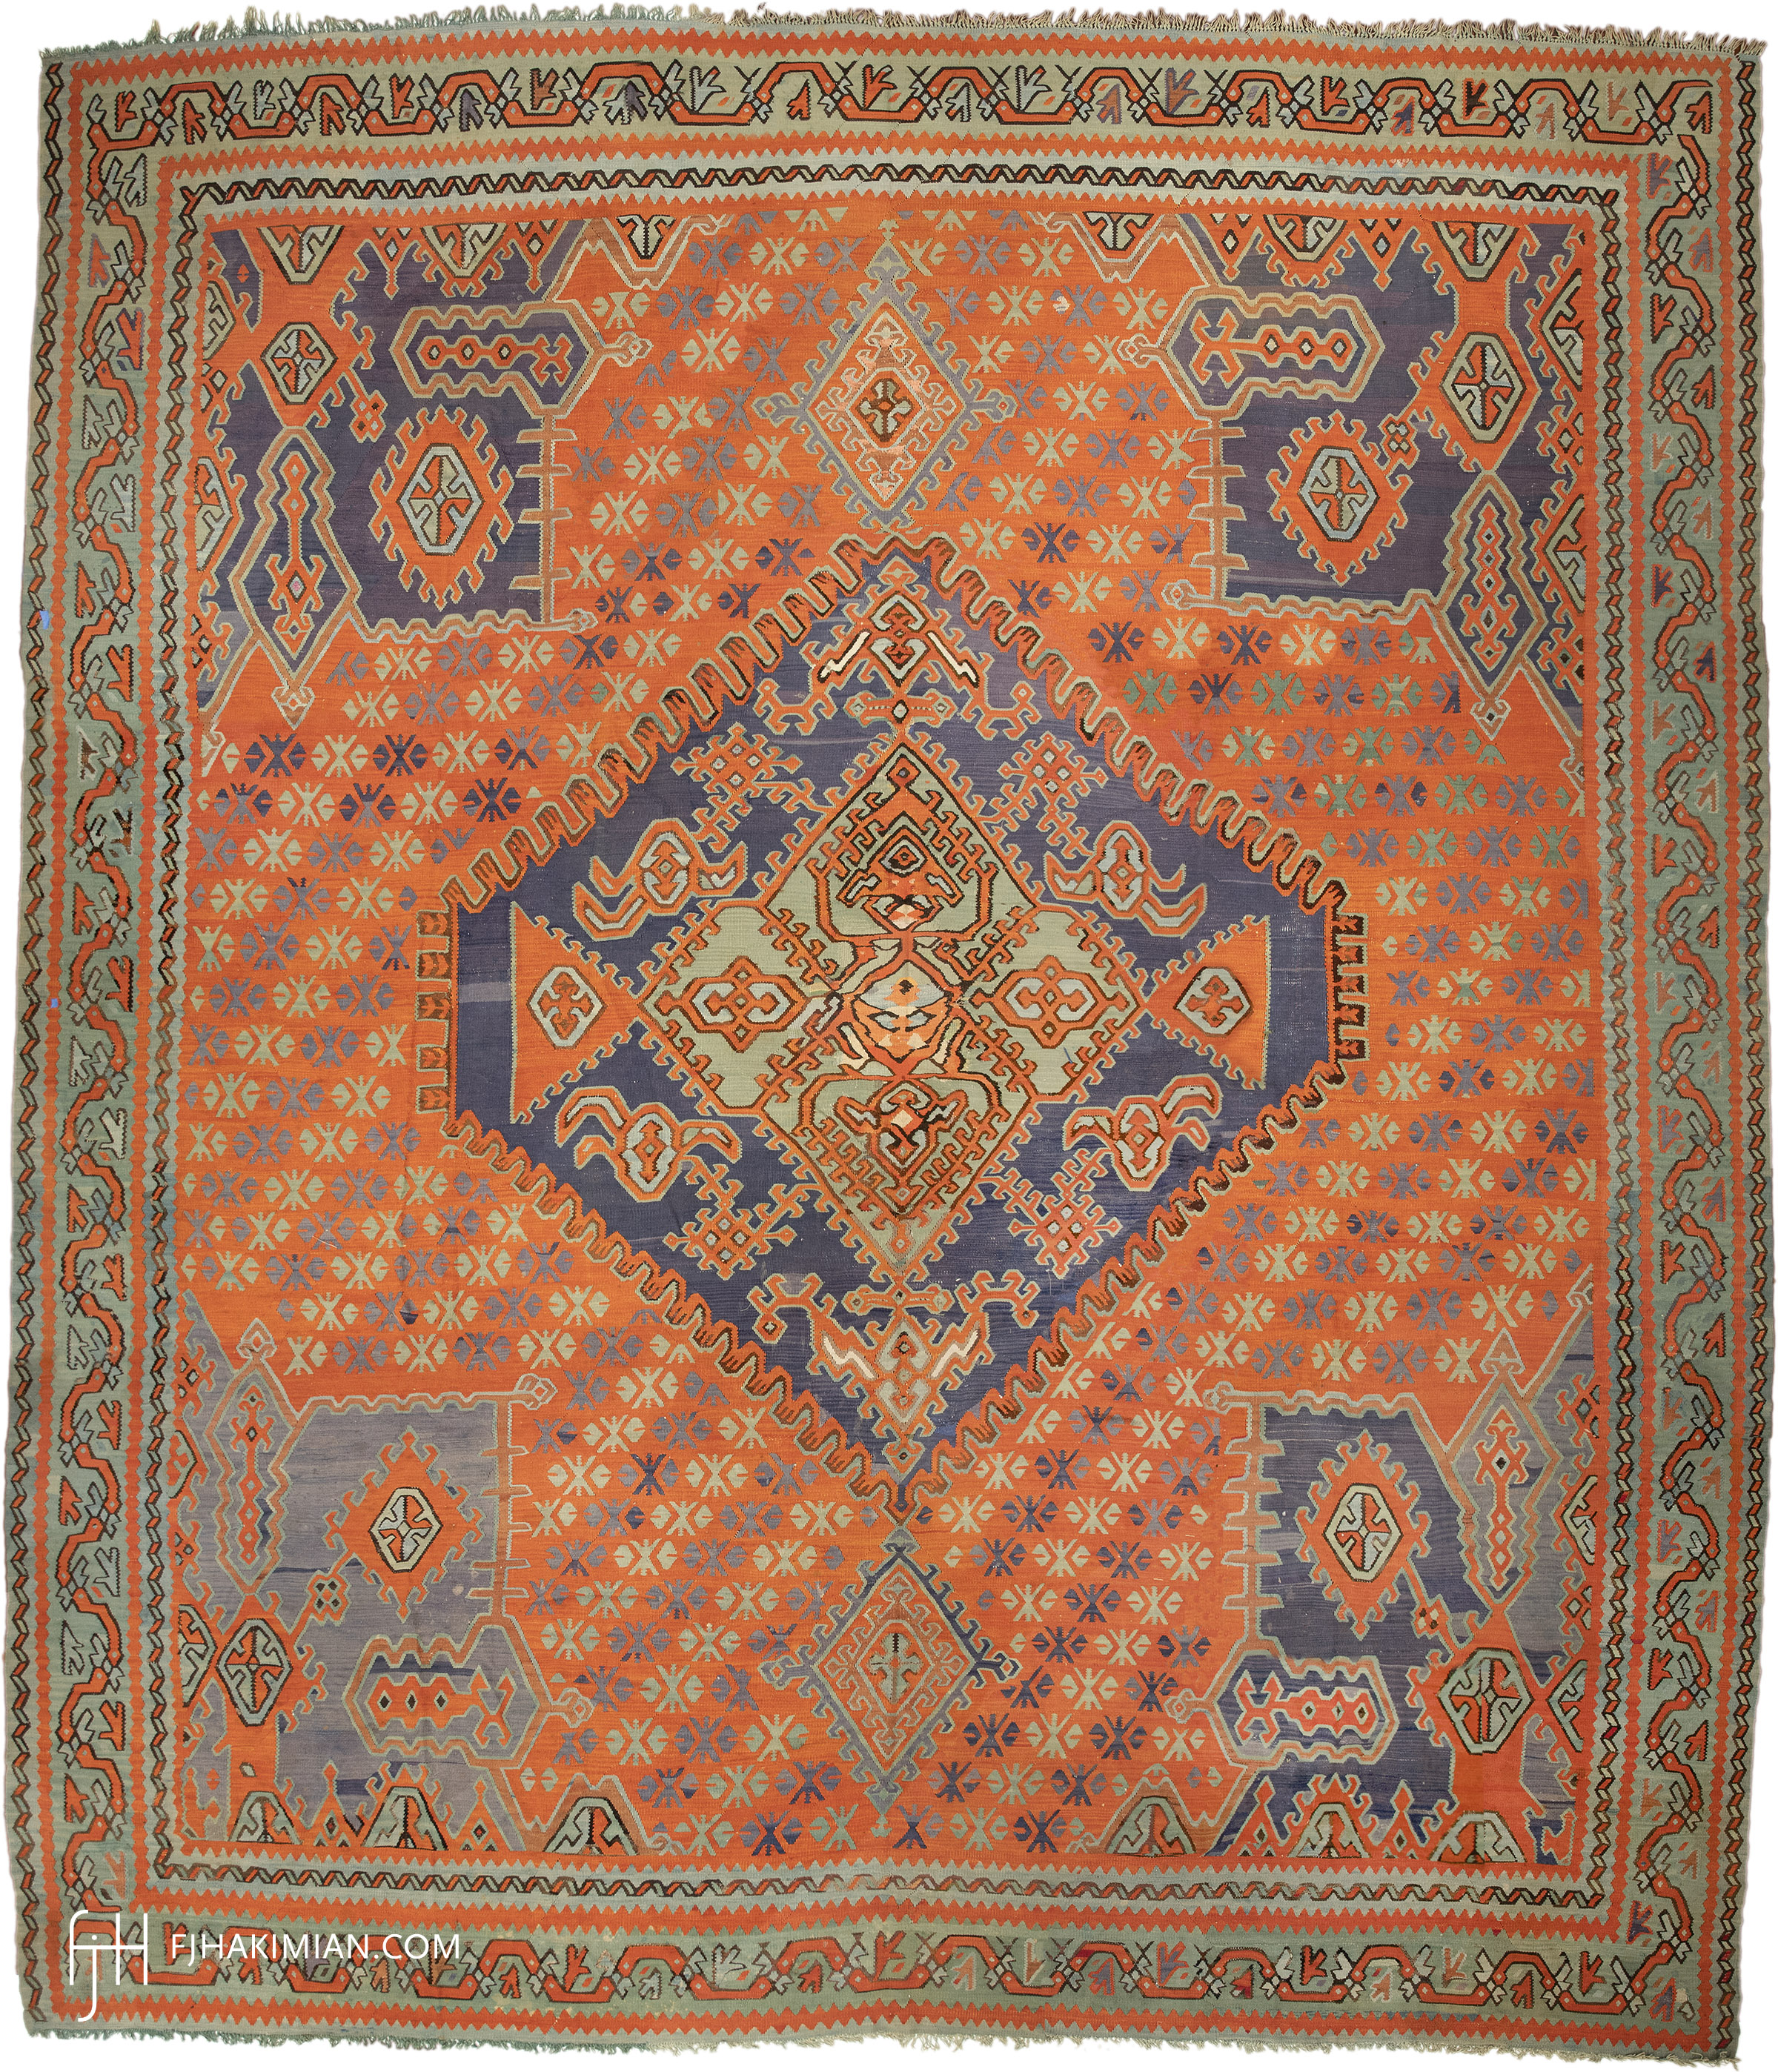 FJ Hakimian | 02380 | Antique Carpet